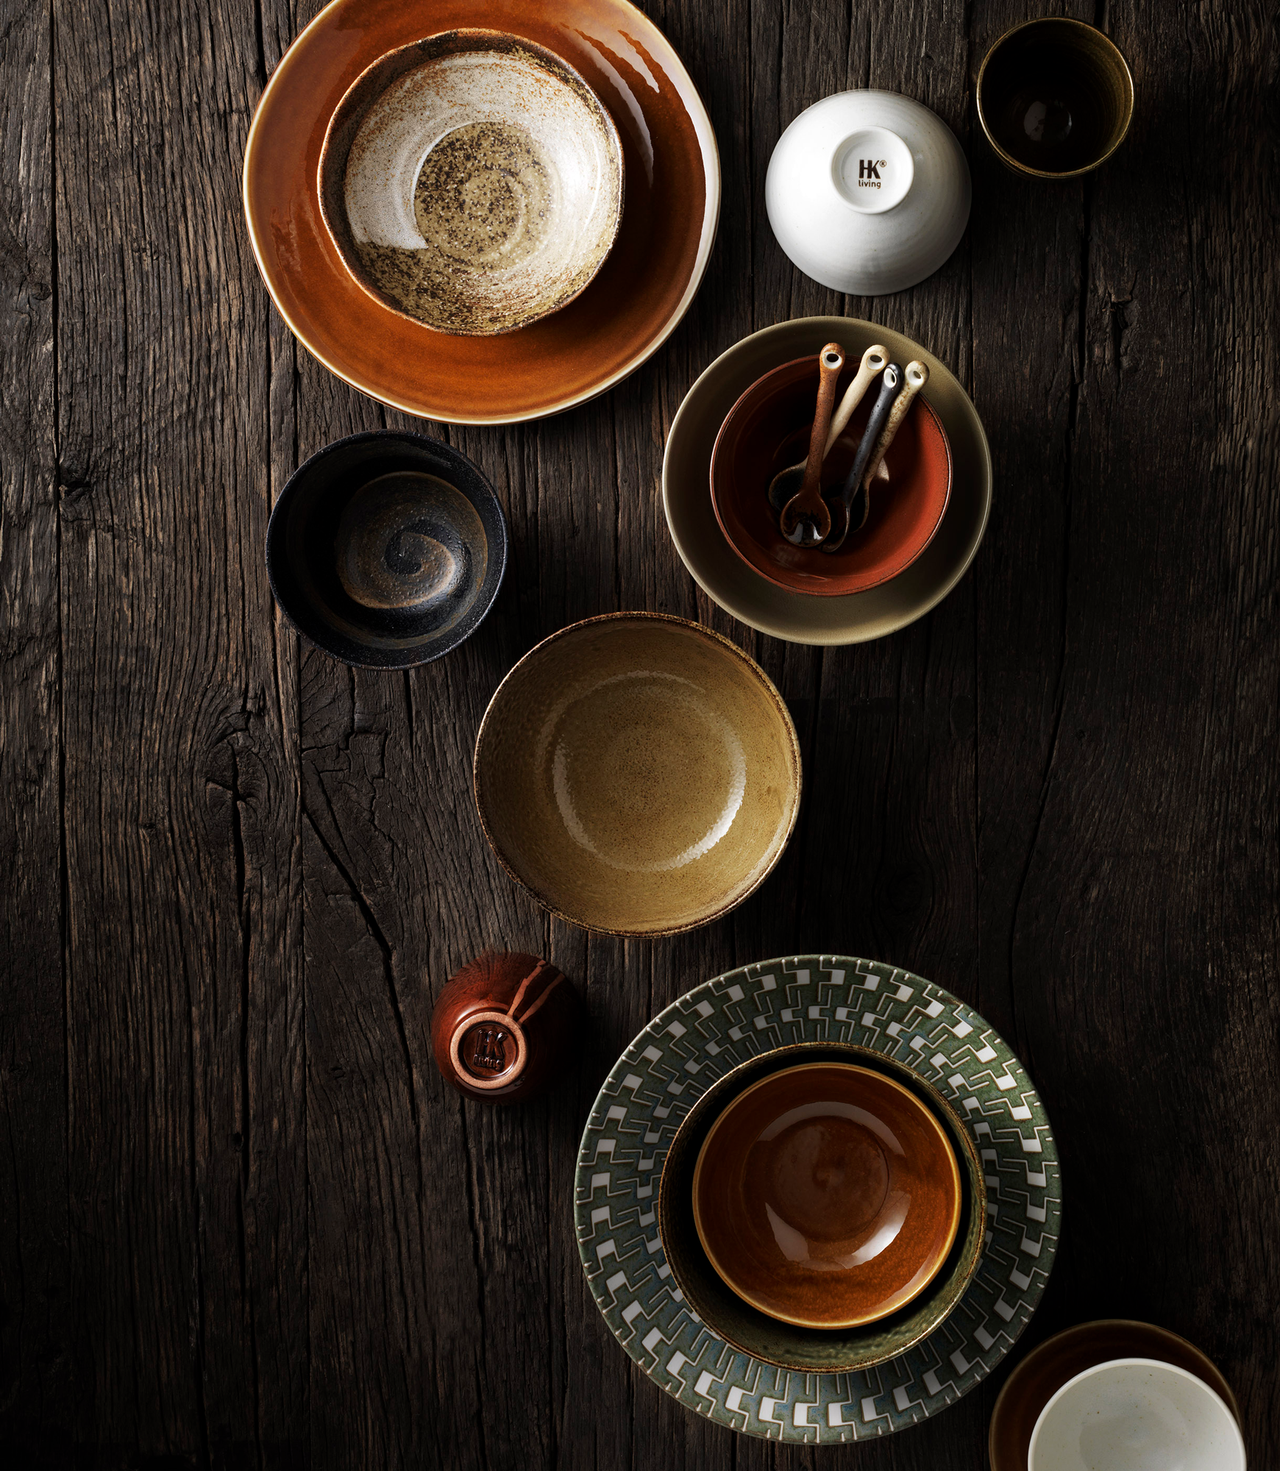 Kyoto ceramics: japanese soup bowl brown